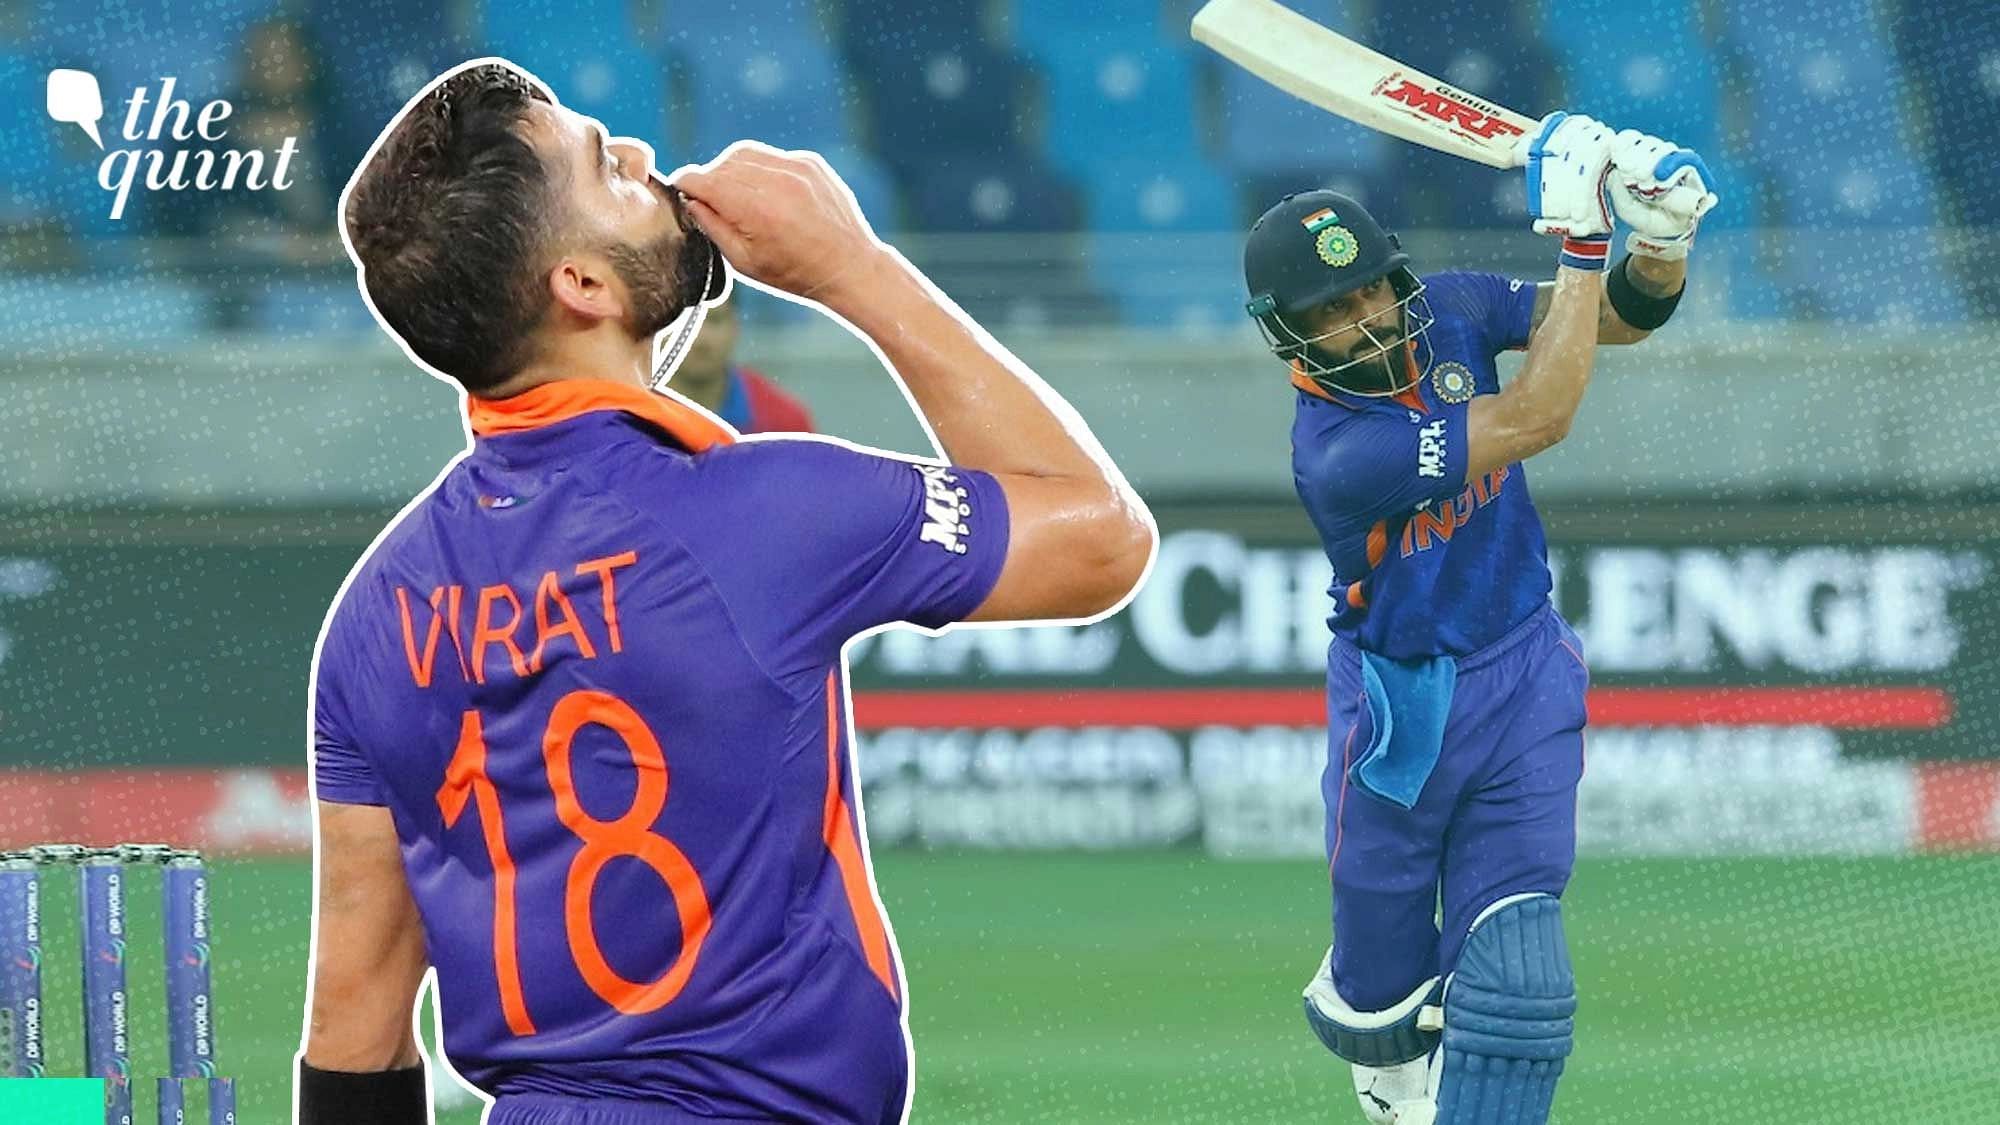 <div class="paragraphs"><p>Team India batter Virat Kohli hit his maiden T20 hundred against Afghanistan in the Asia Cup Super 4 match on Thursday.&nbsp;</p></div>